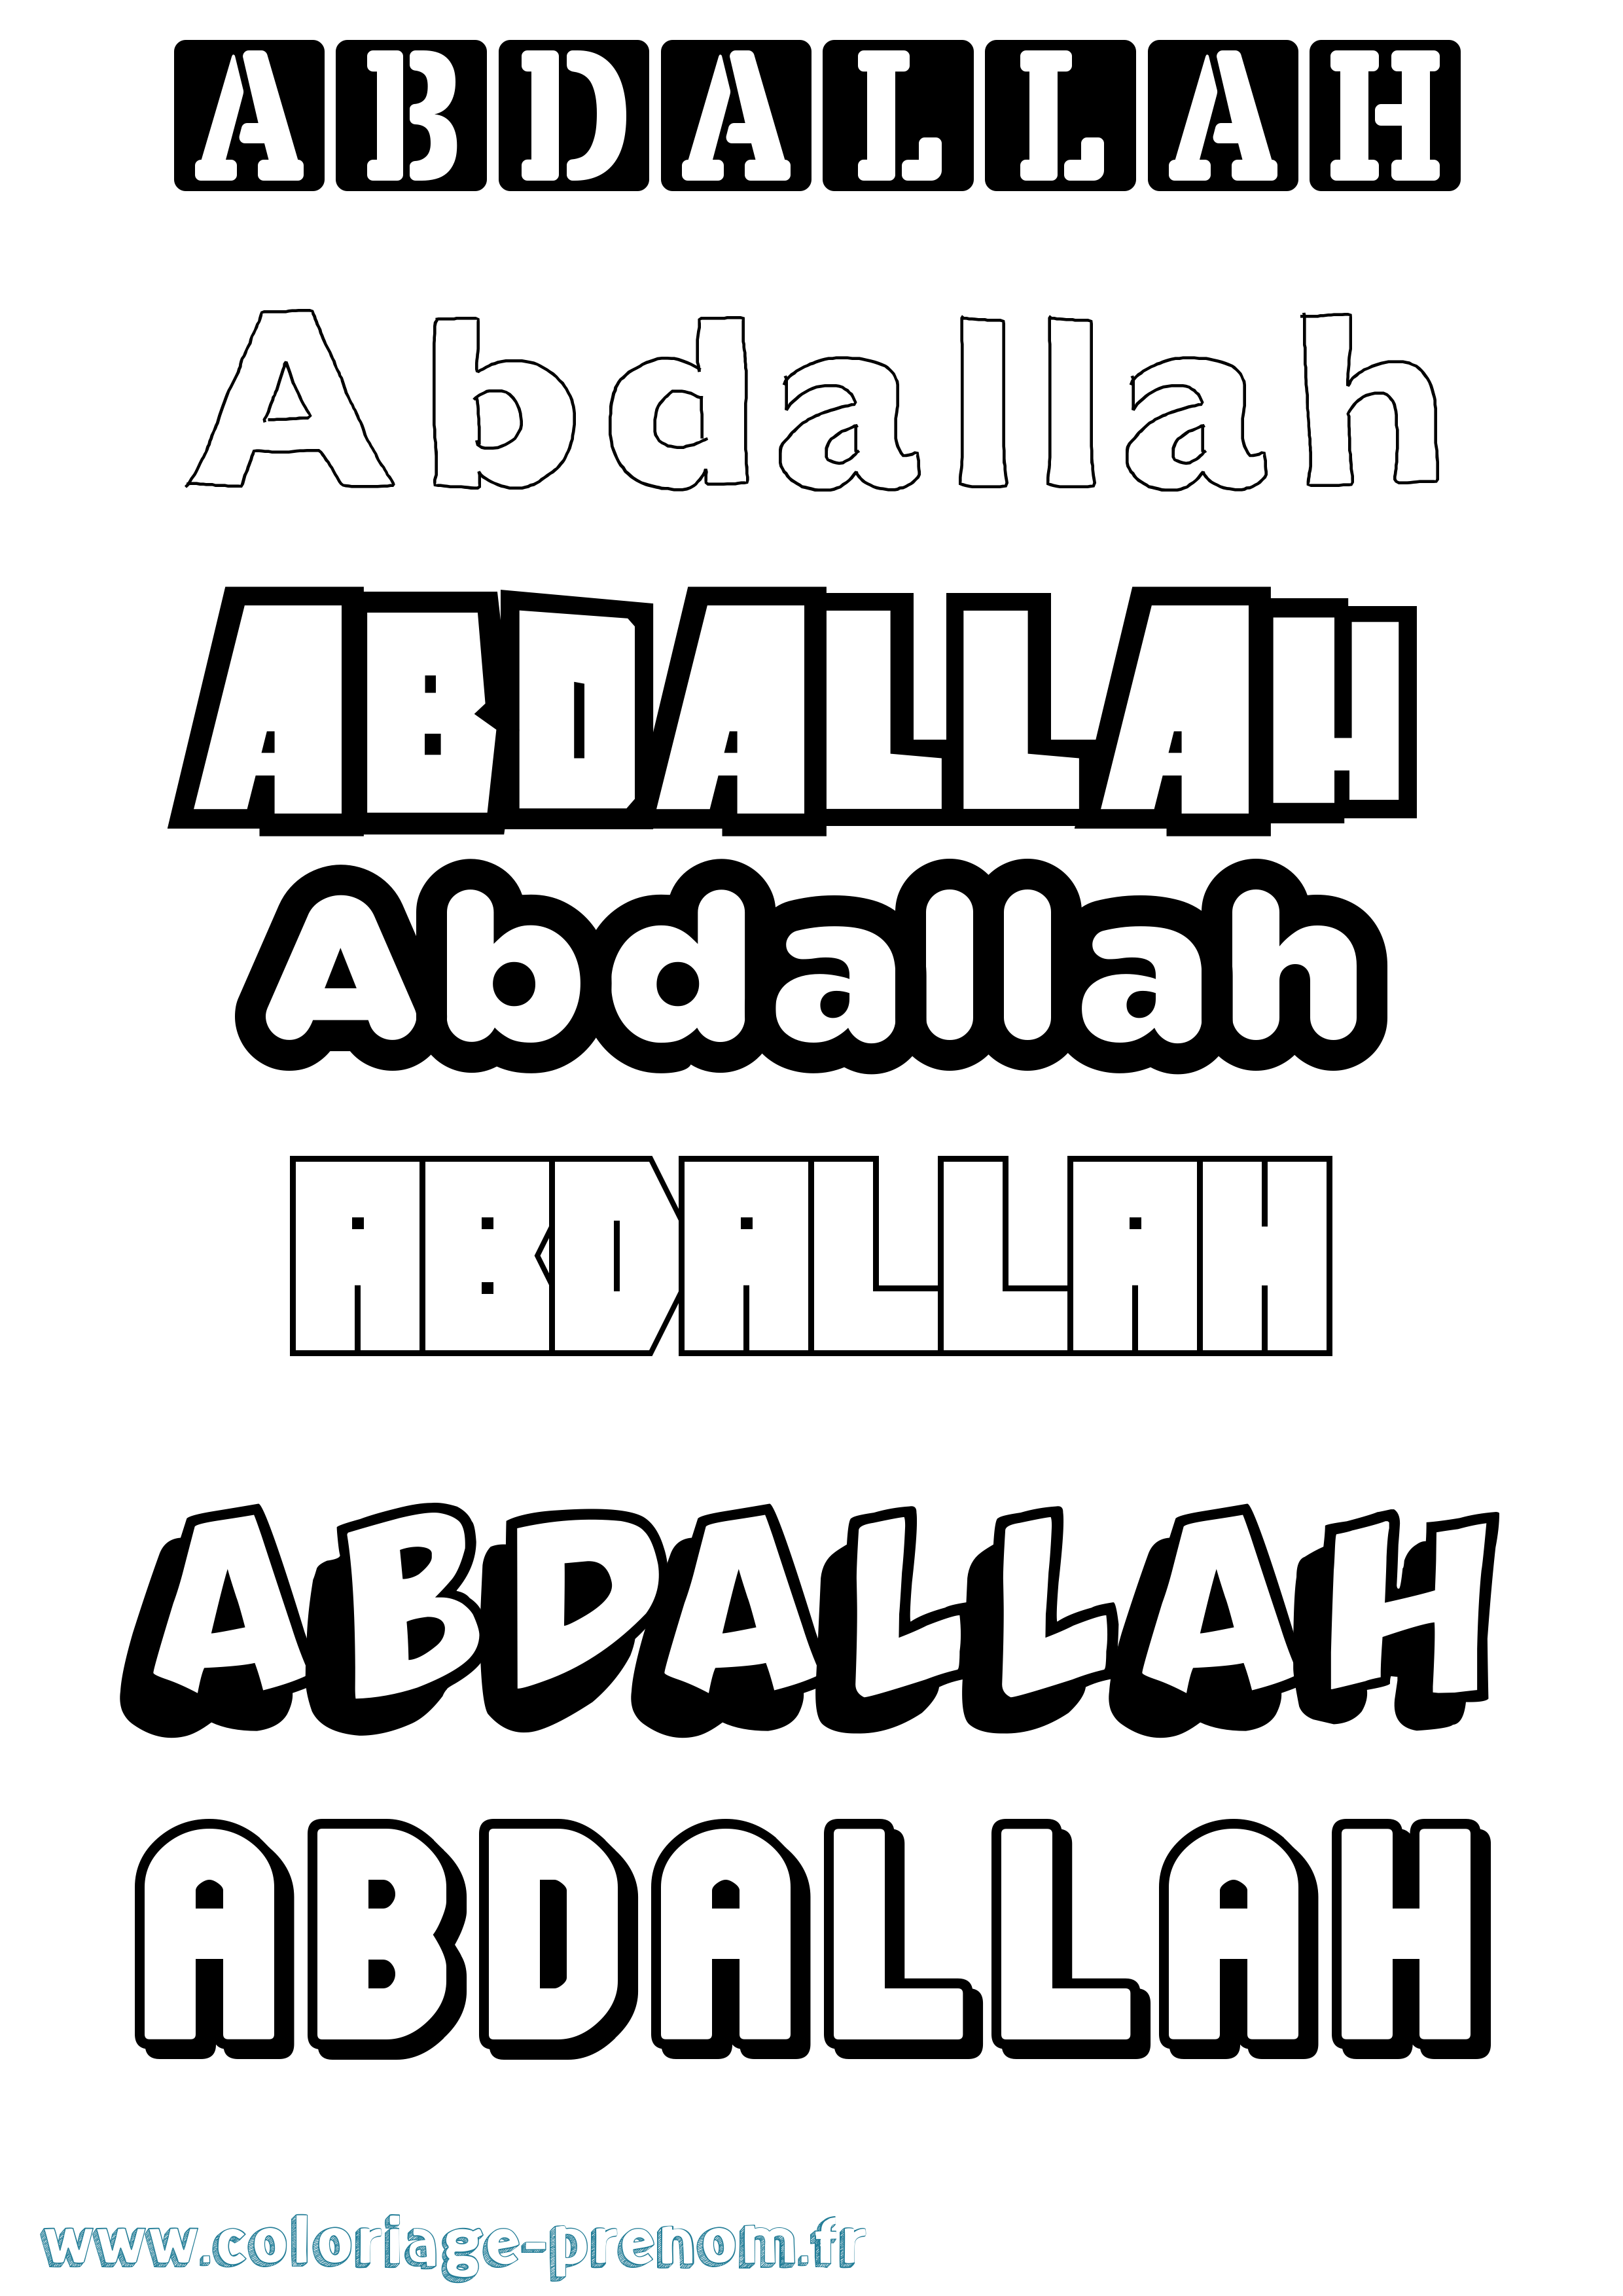 Coloriage prénom Abdallah Simple